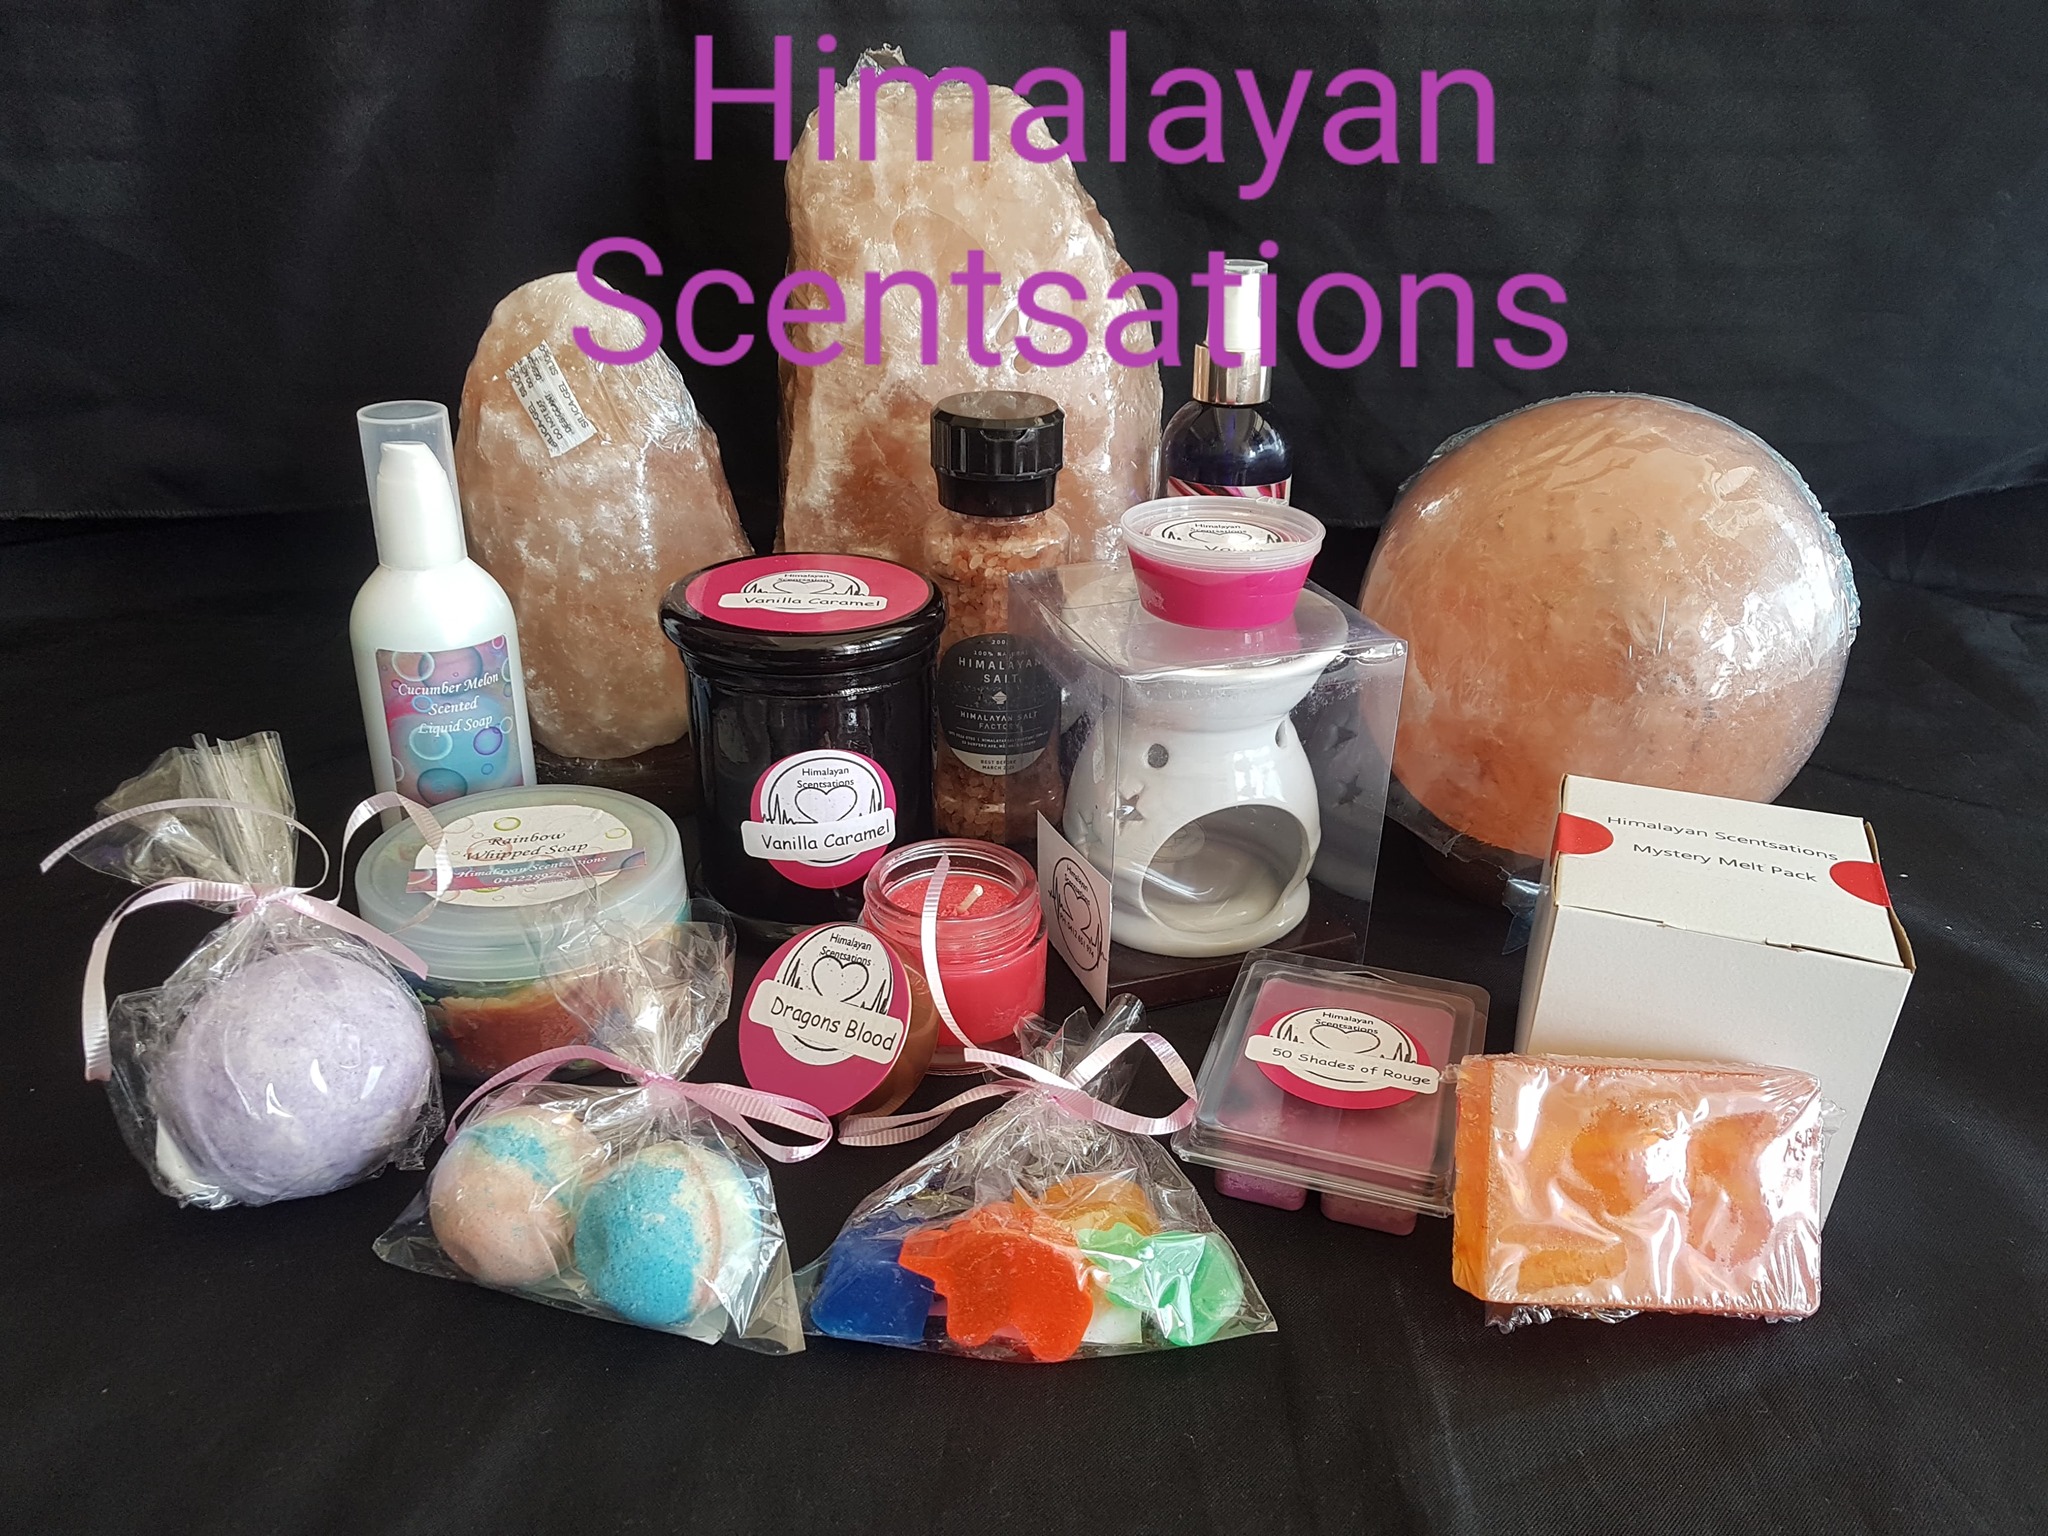 Himalayan Scentsations